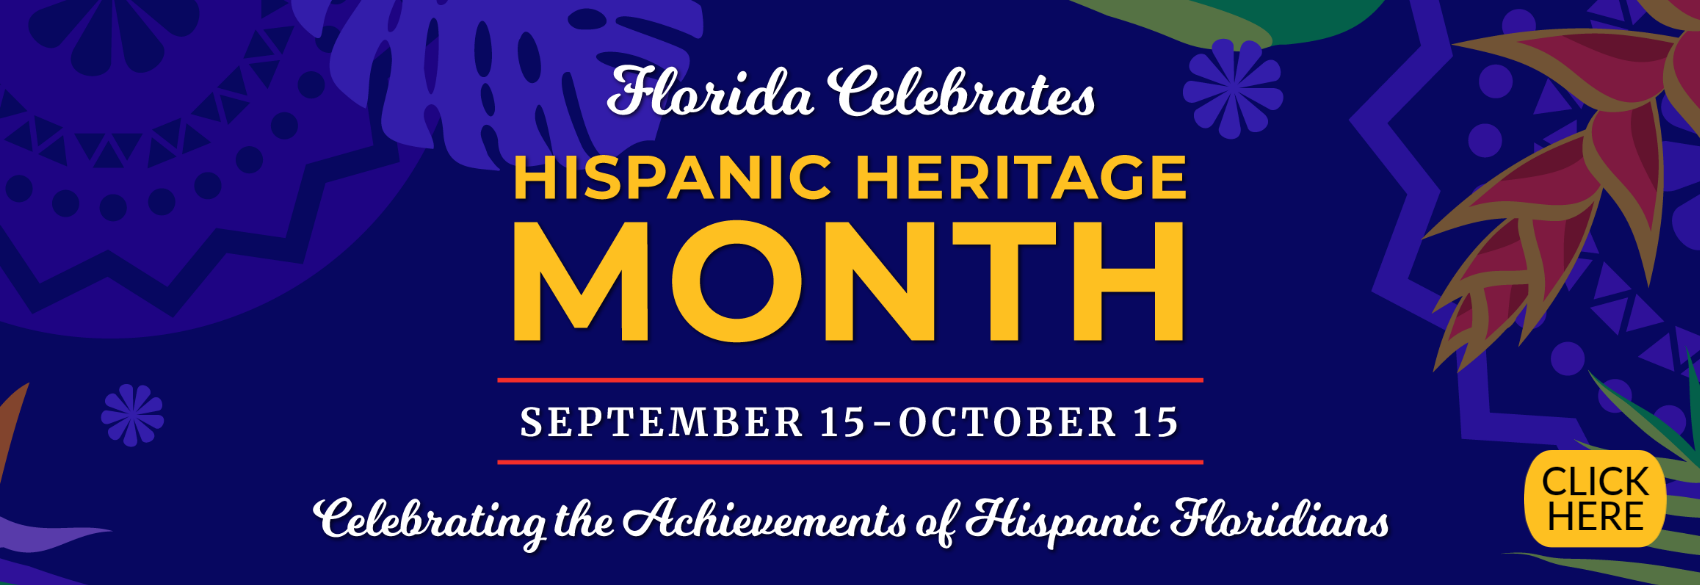 Hispanic Heritage Month Contests